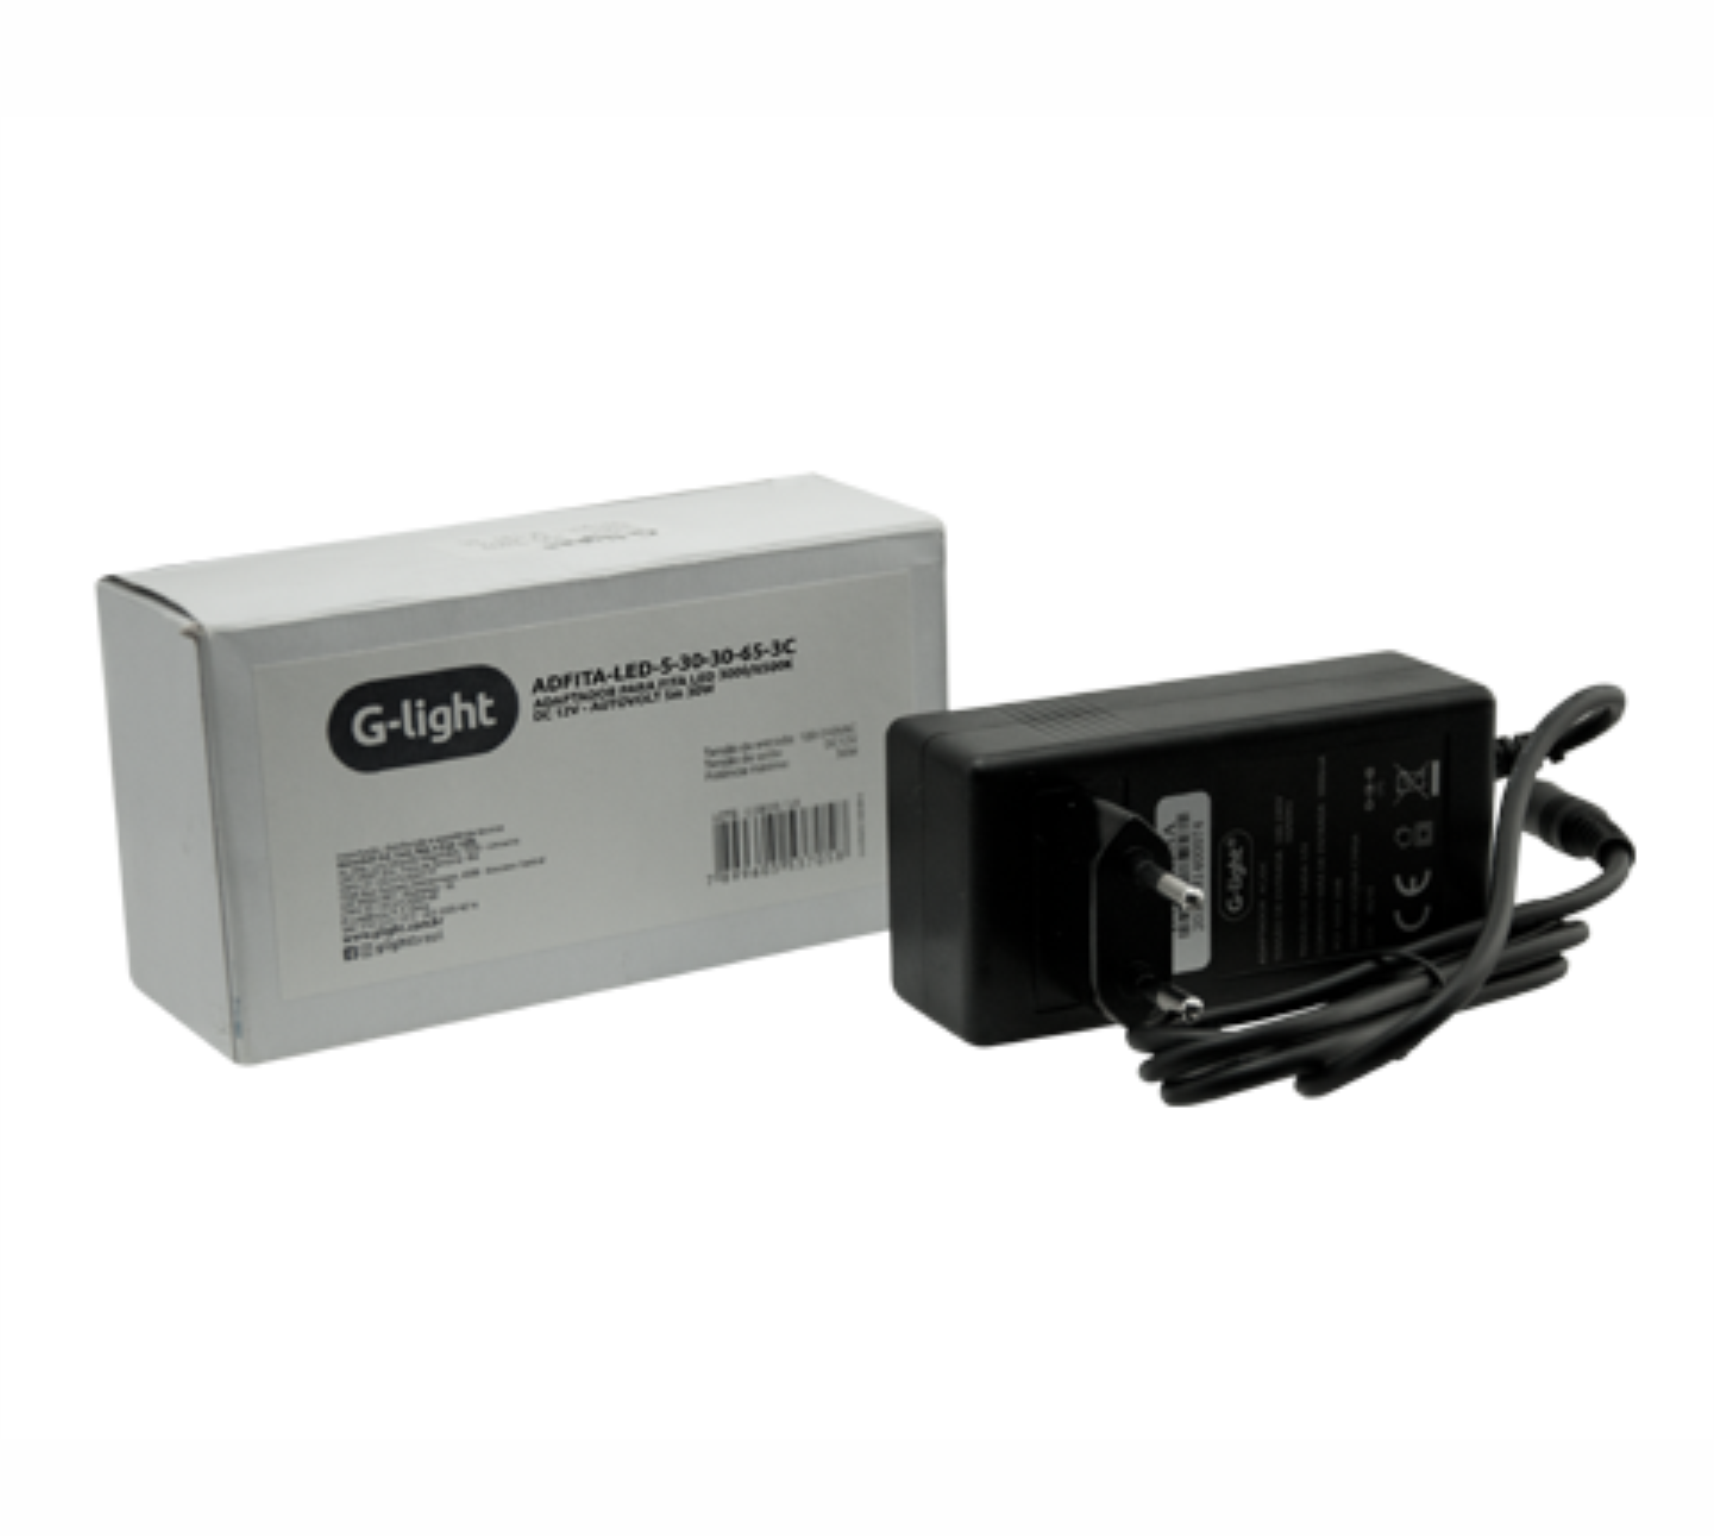 ADFITA-LED-5-30-30-65-3C <span>(caixa)</span><br/>